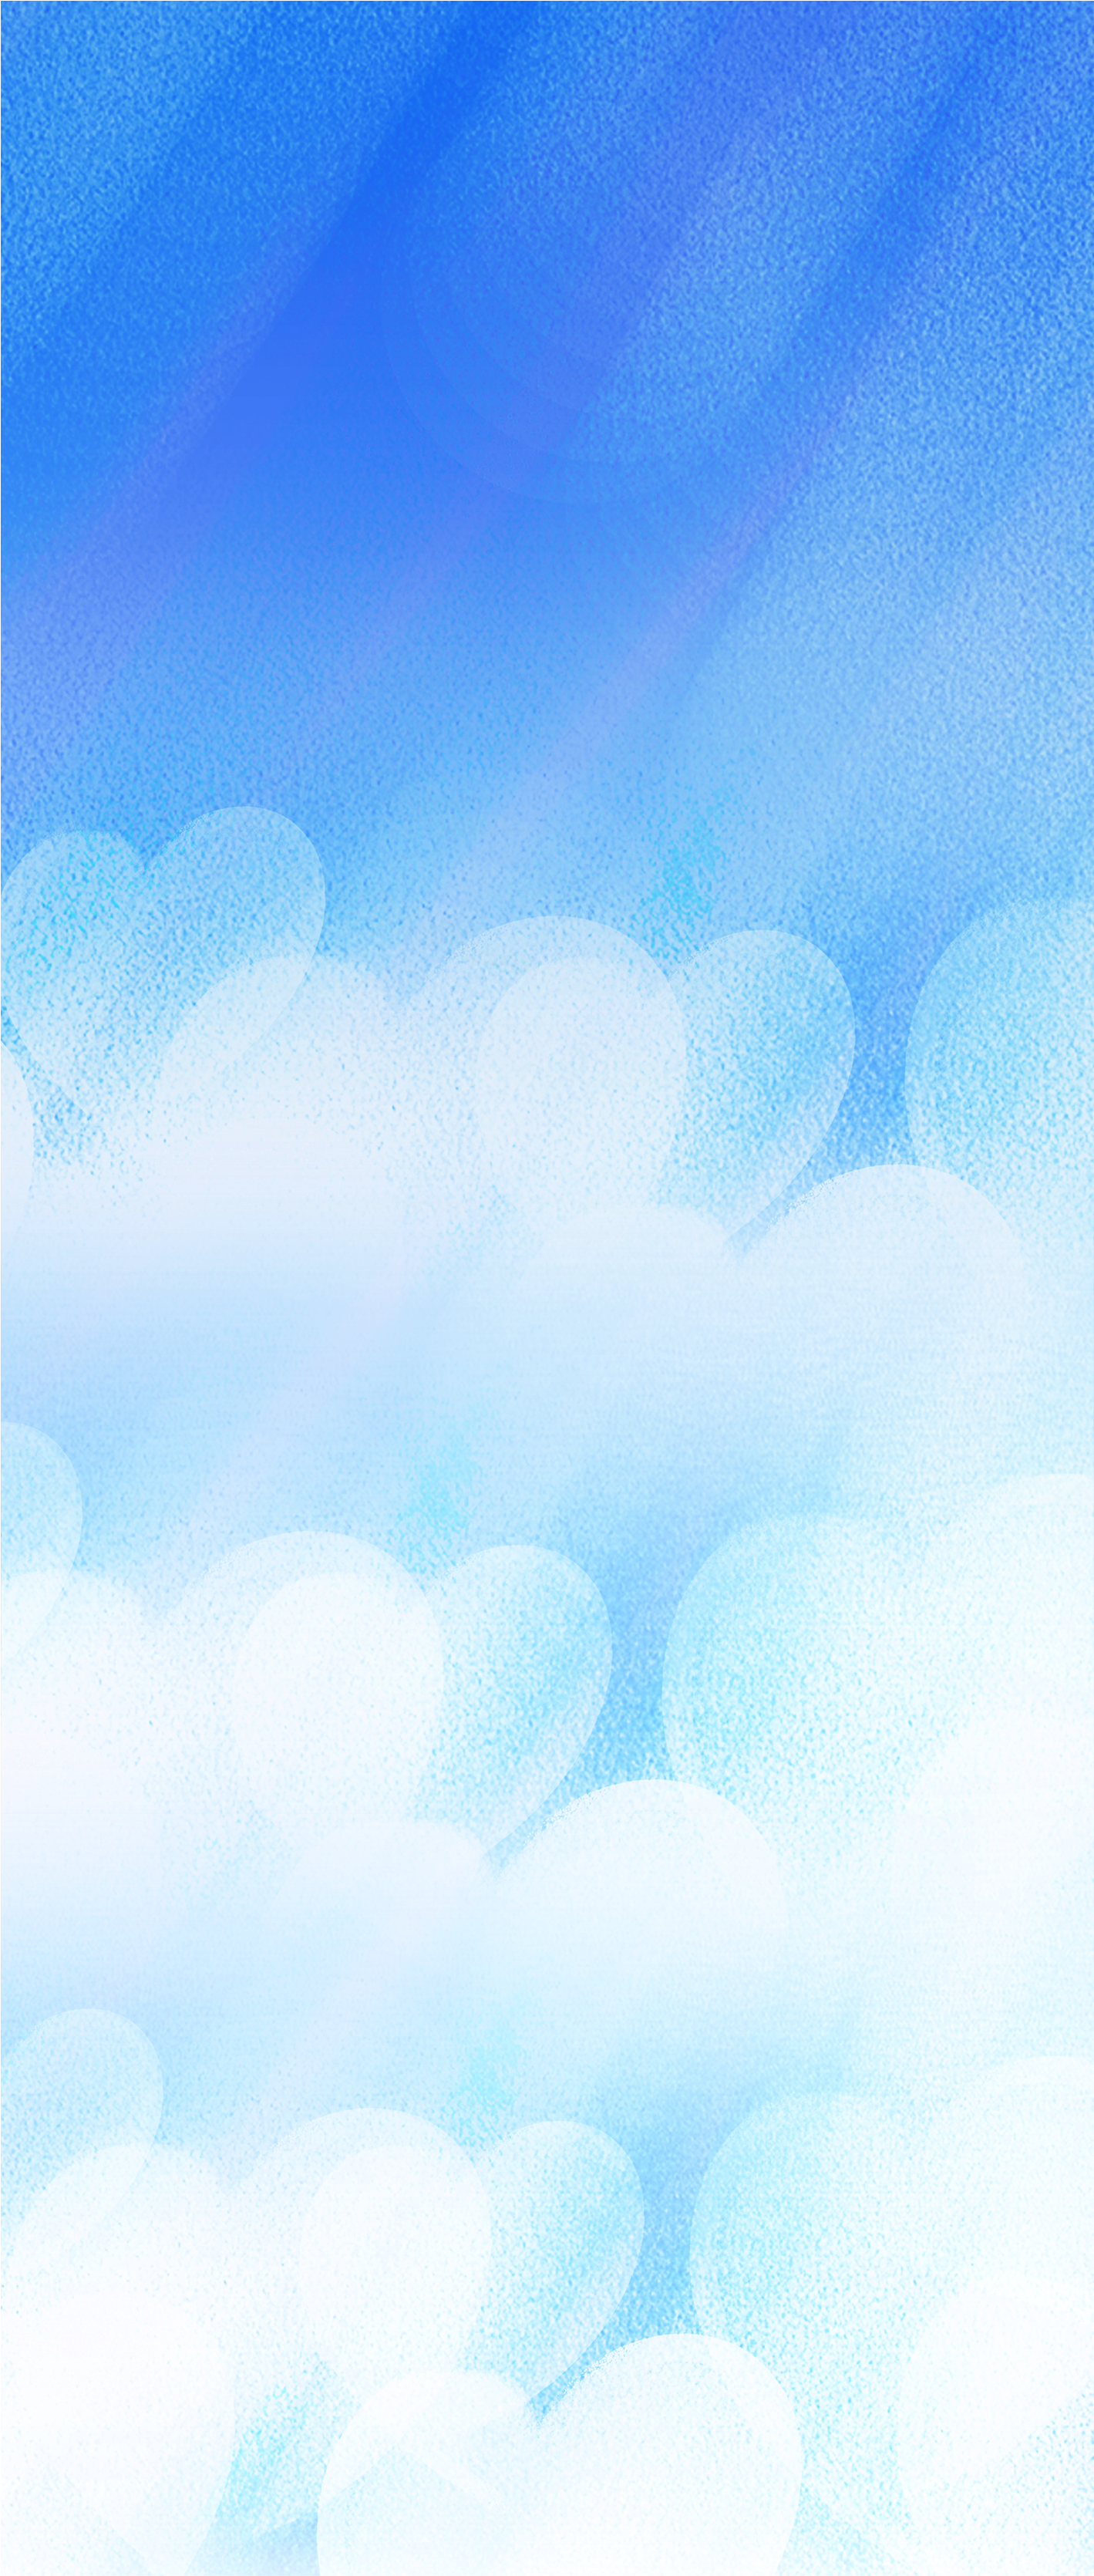 Download Sky Blue Background - Illustration PNG Image with No Background -  